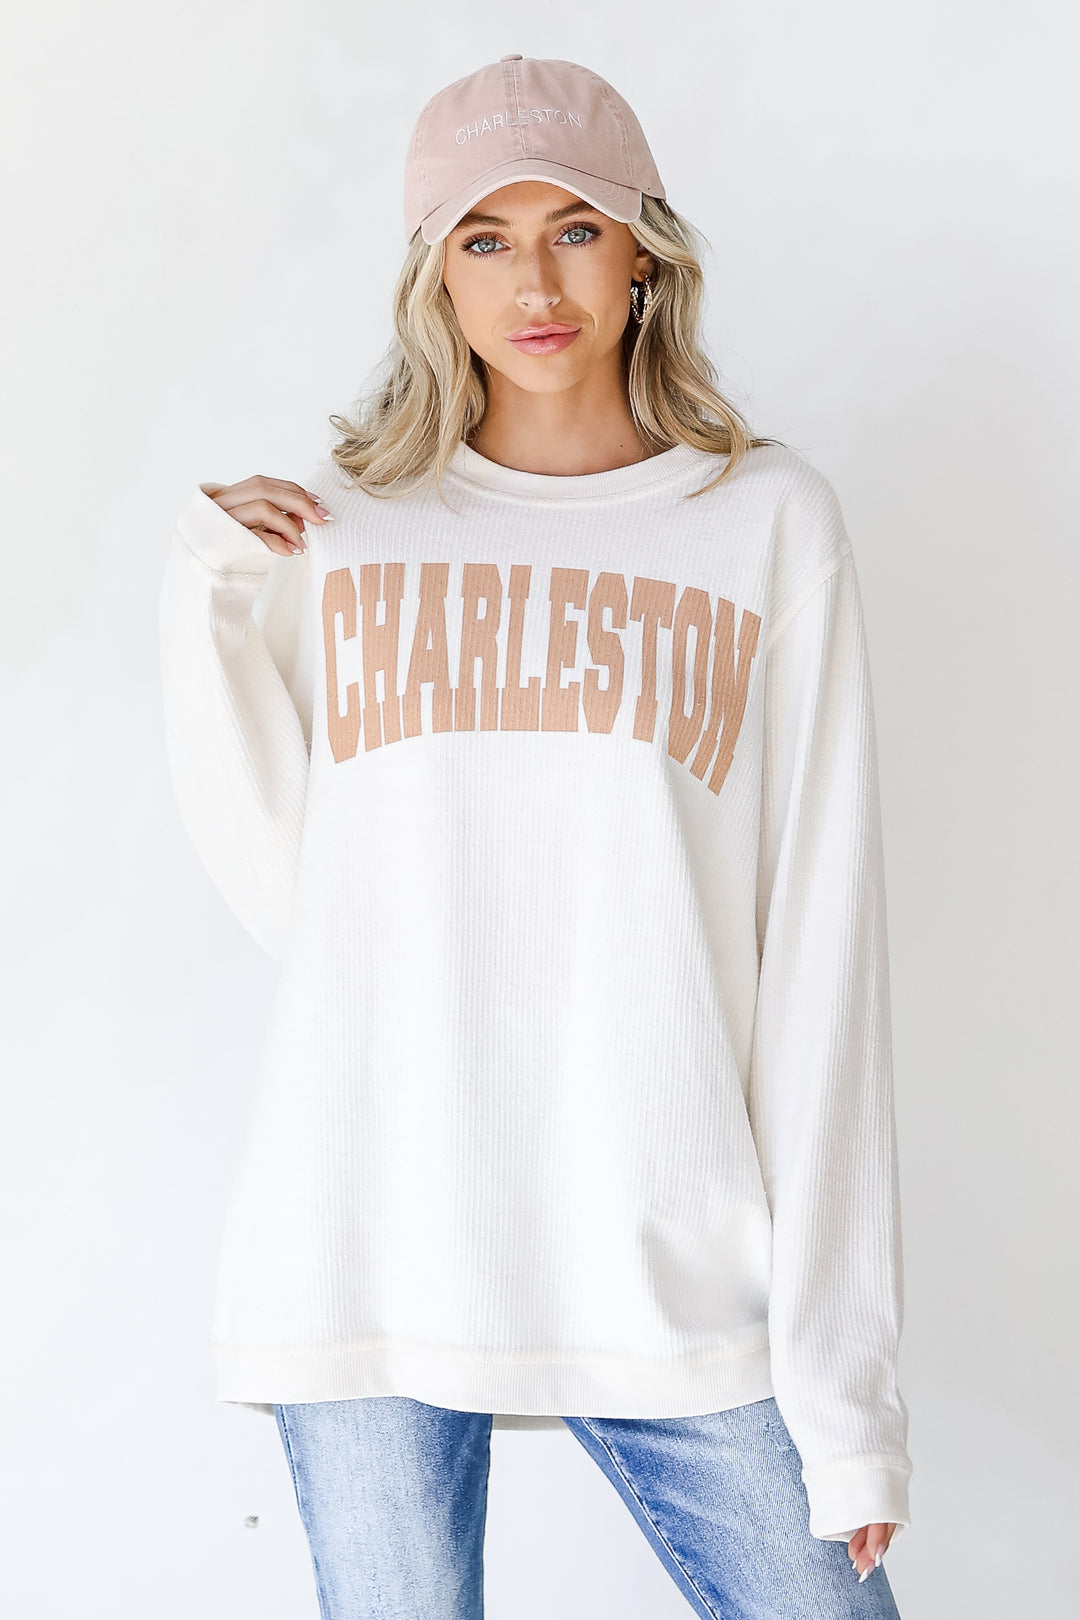 Charleston Corded Pullover. Graphic Sweatshirt. Charleston Sweatshirt. Oversized, comfy